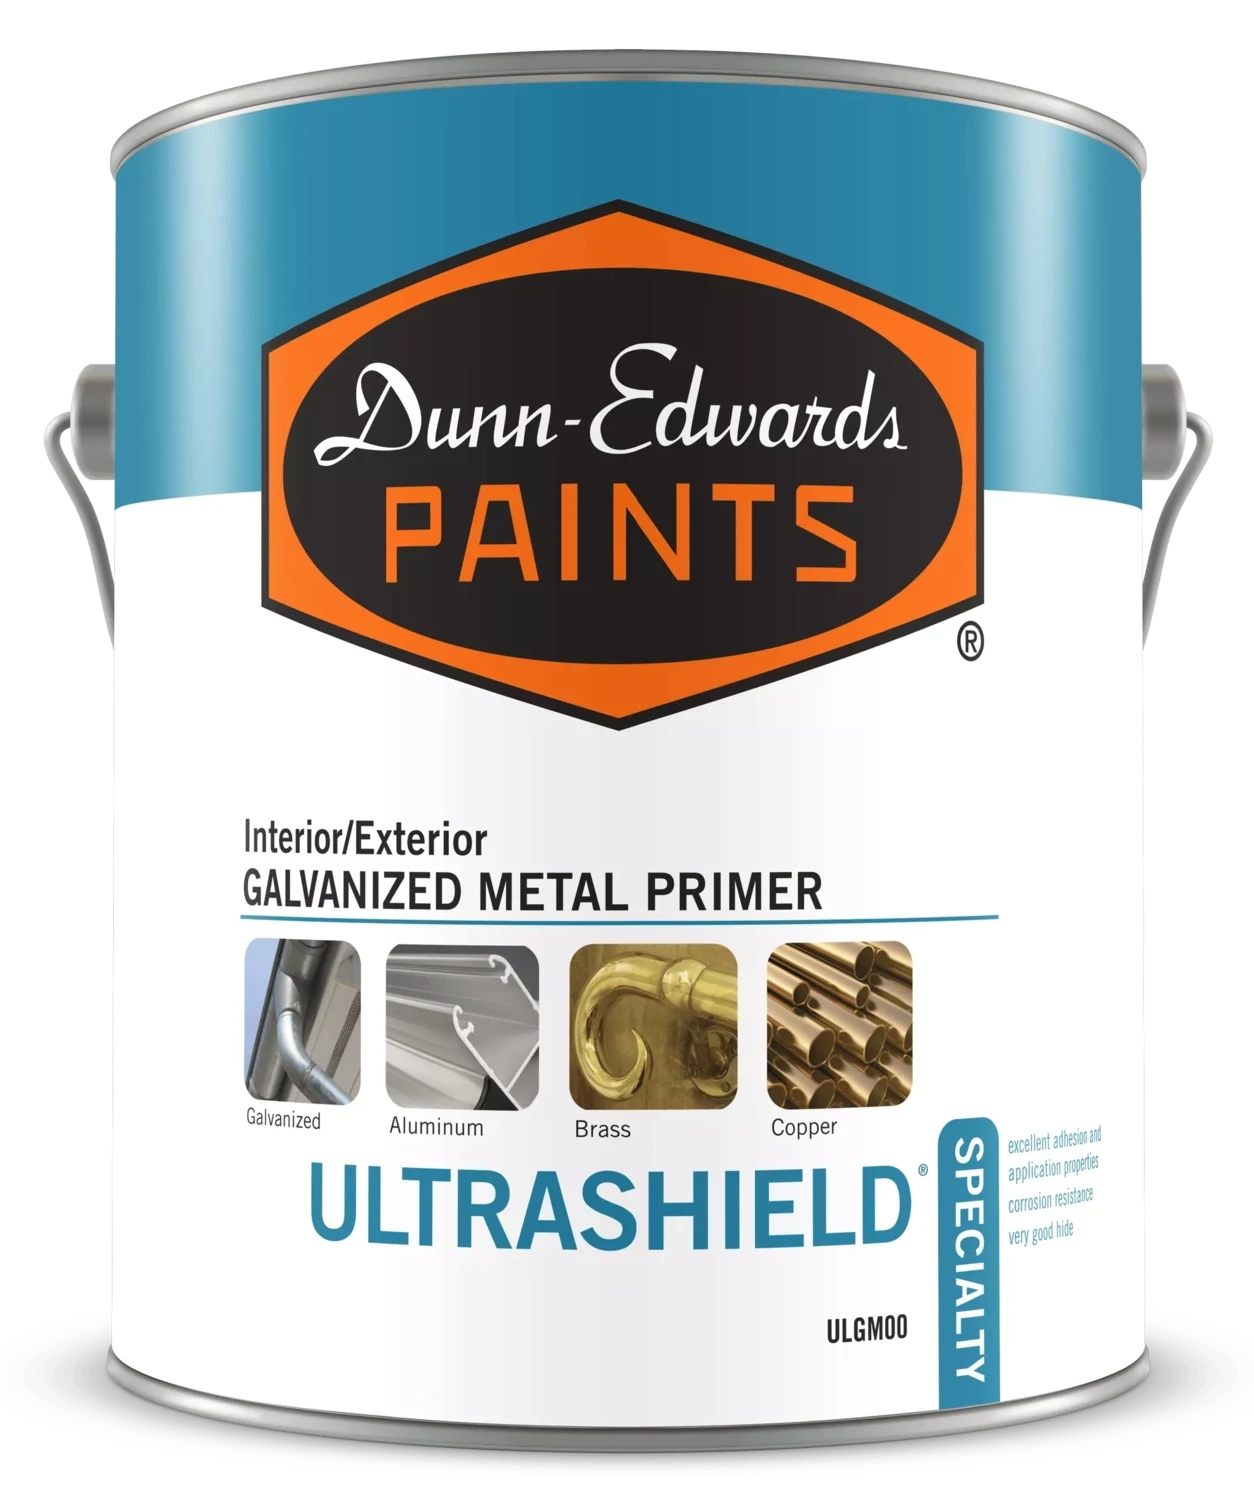 Ultrashield Specialty Interior/Exterior Galvanized Metal Primer